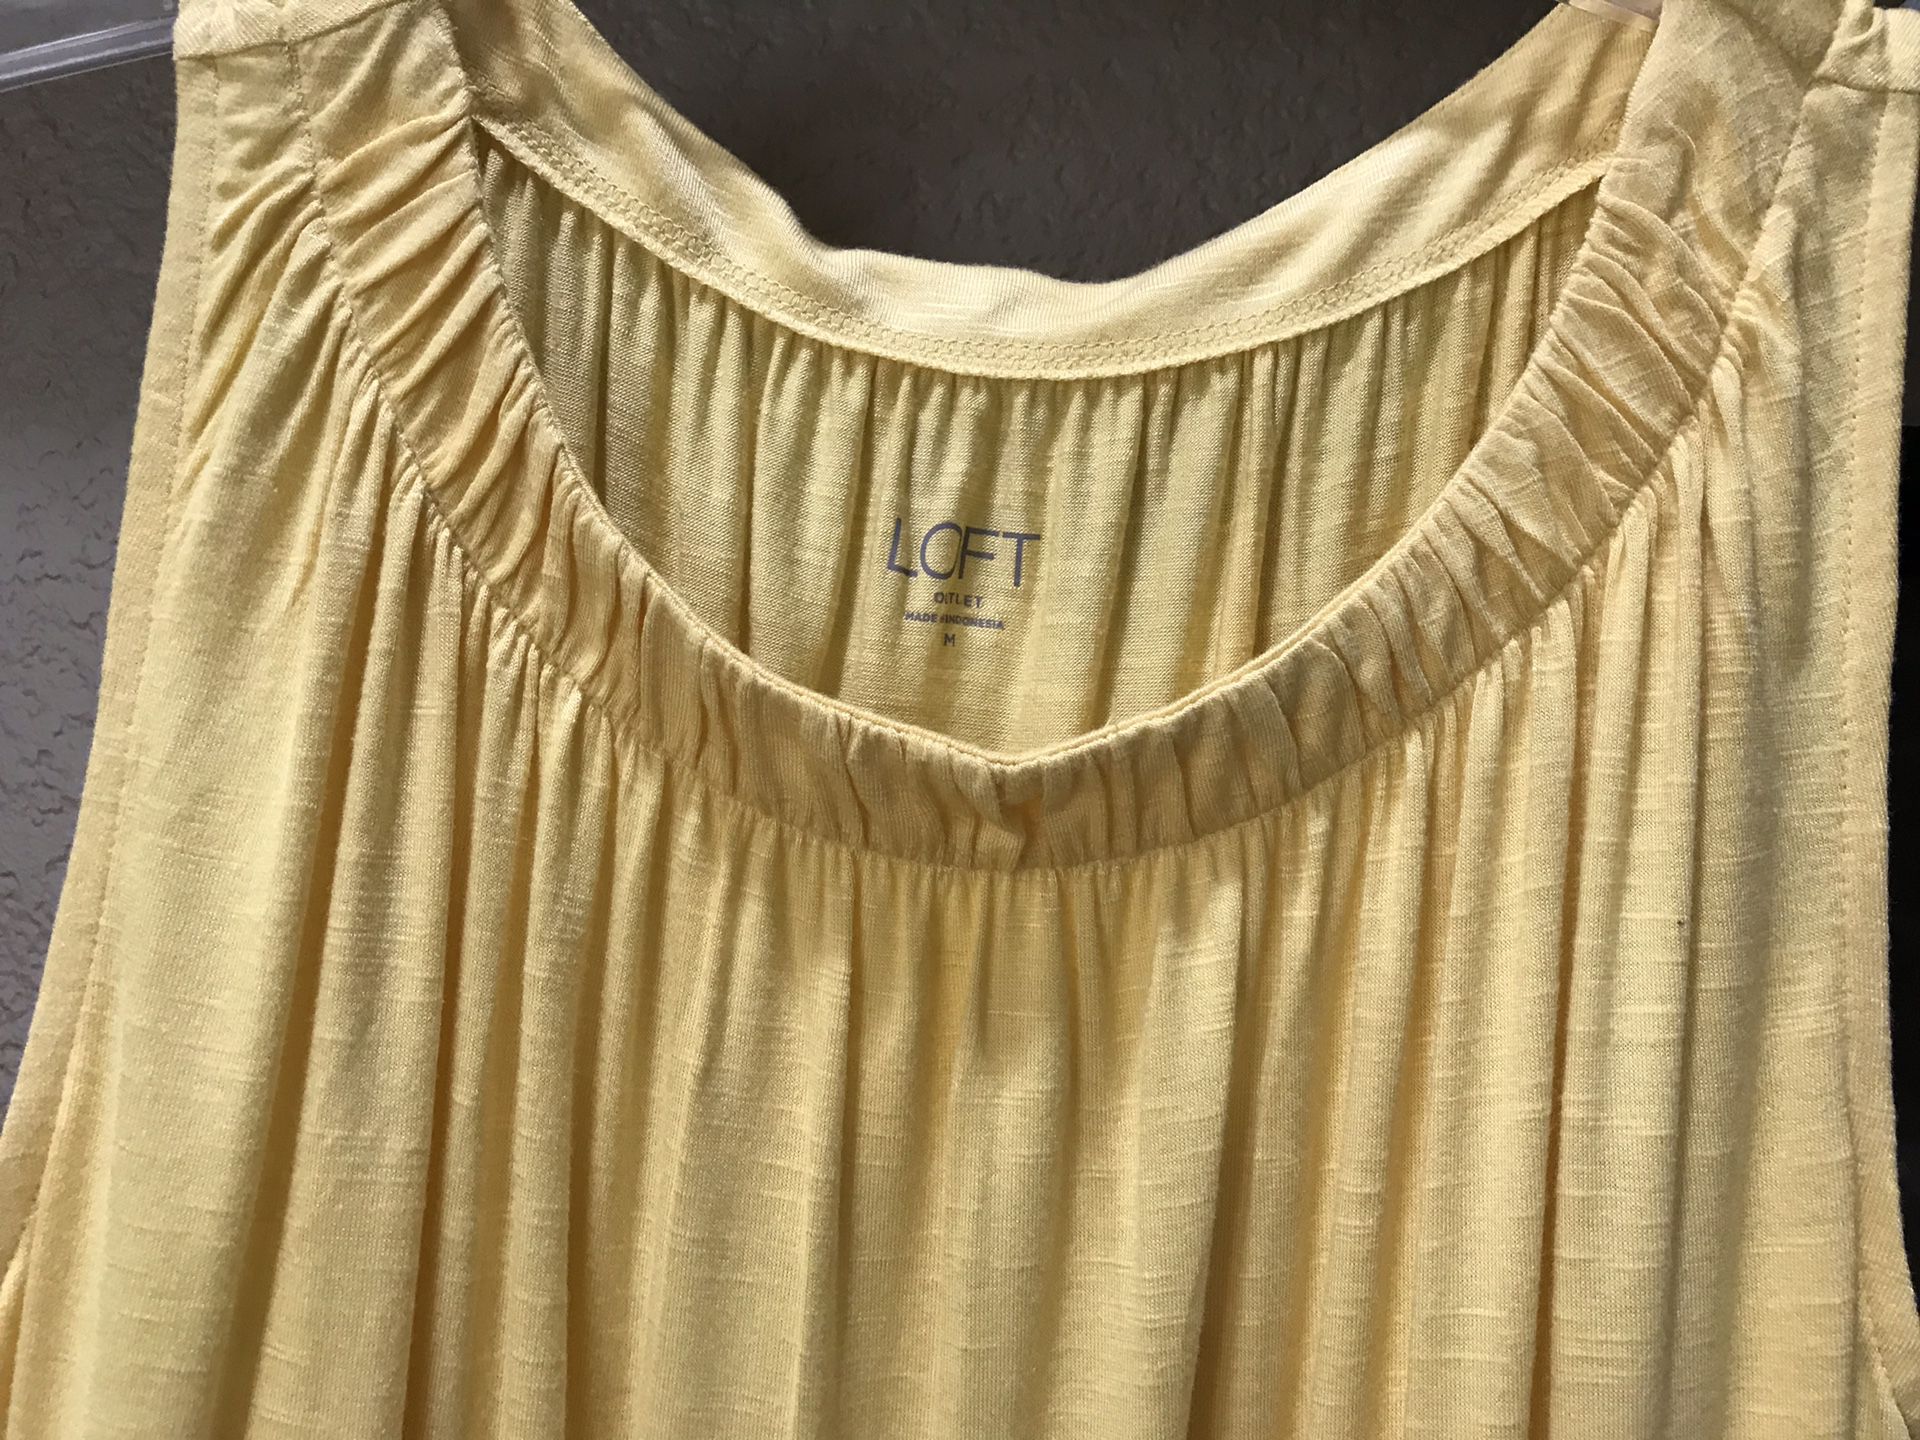 Ann Taylor Loft yellow sleeveless top, size medium